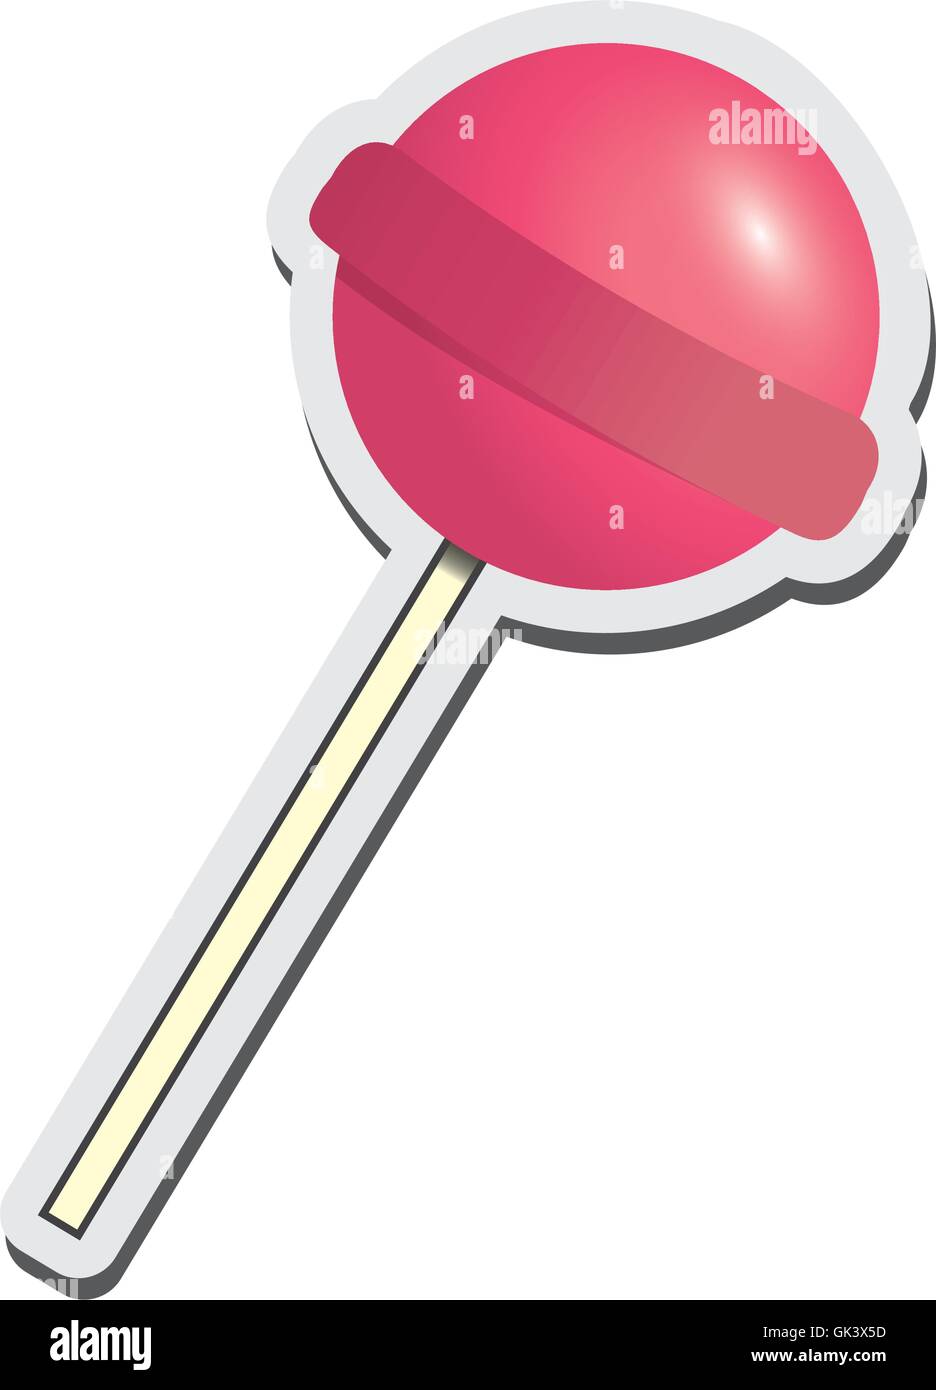 candy lollipop icon Stock Vector